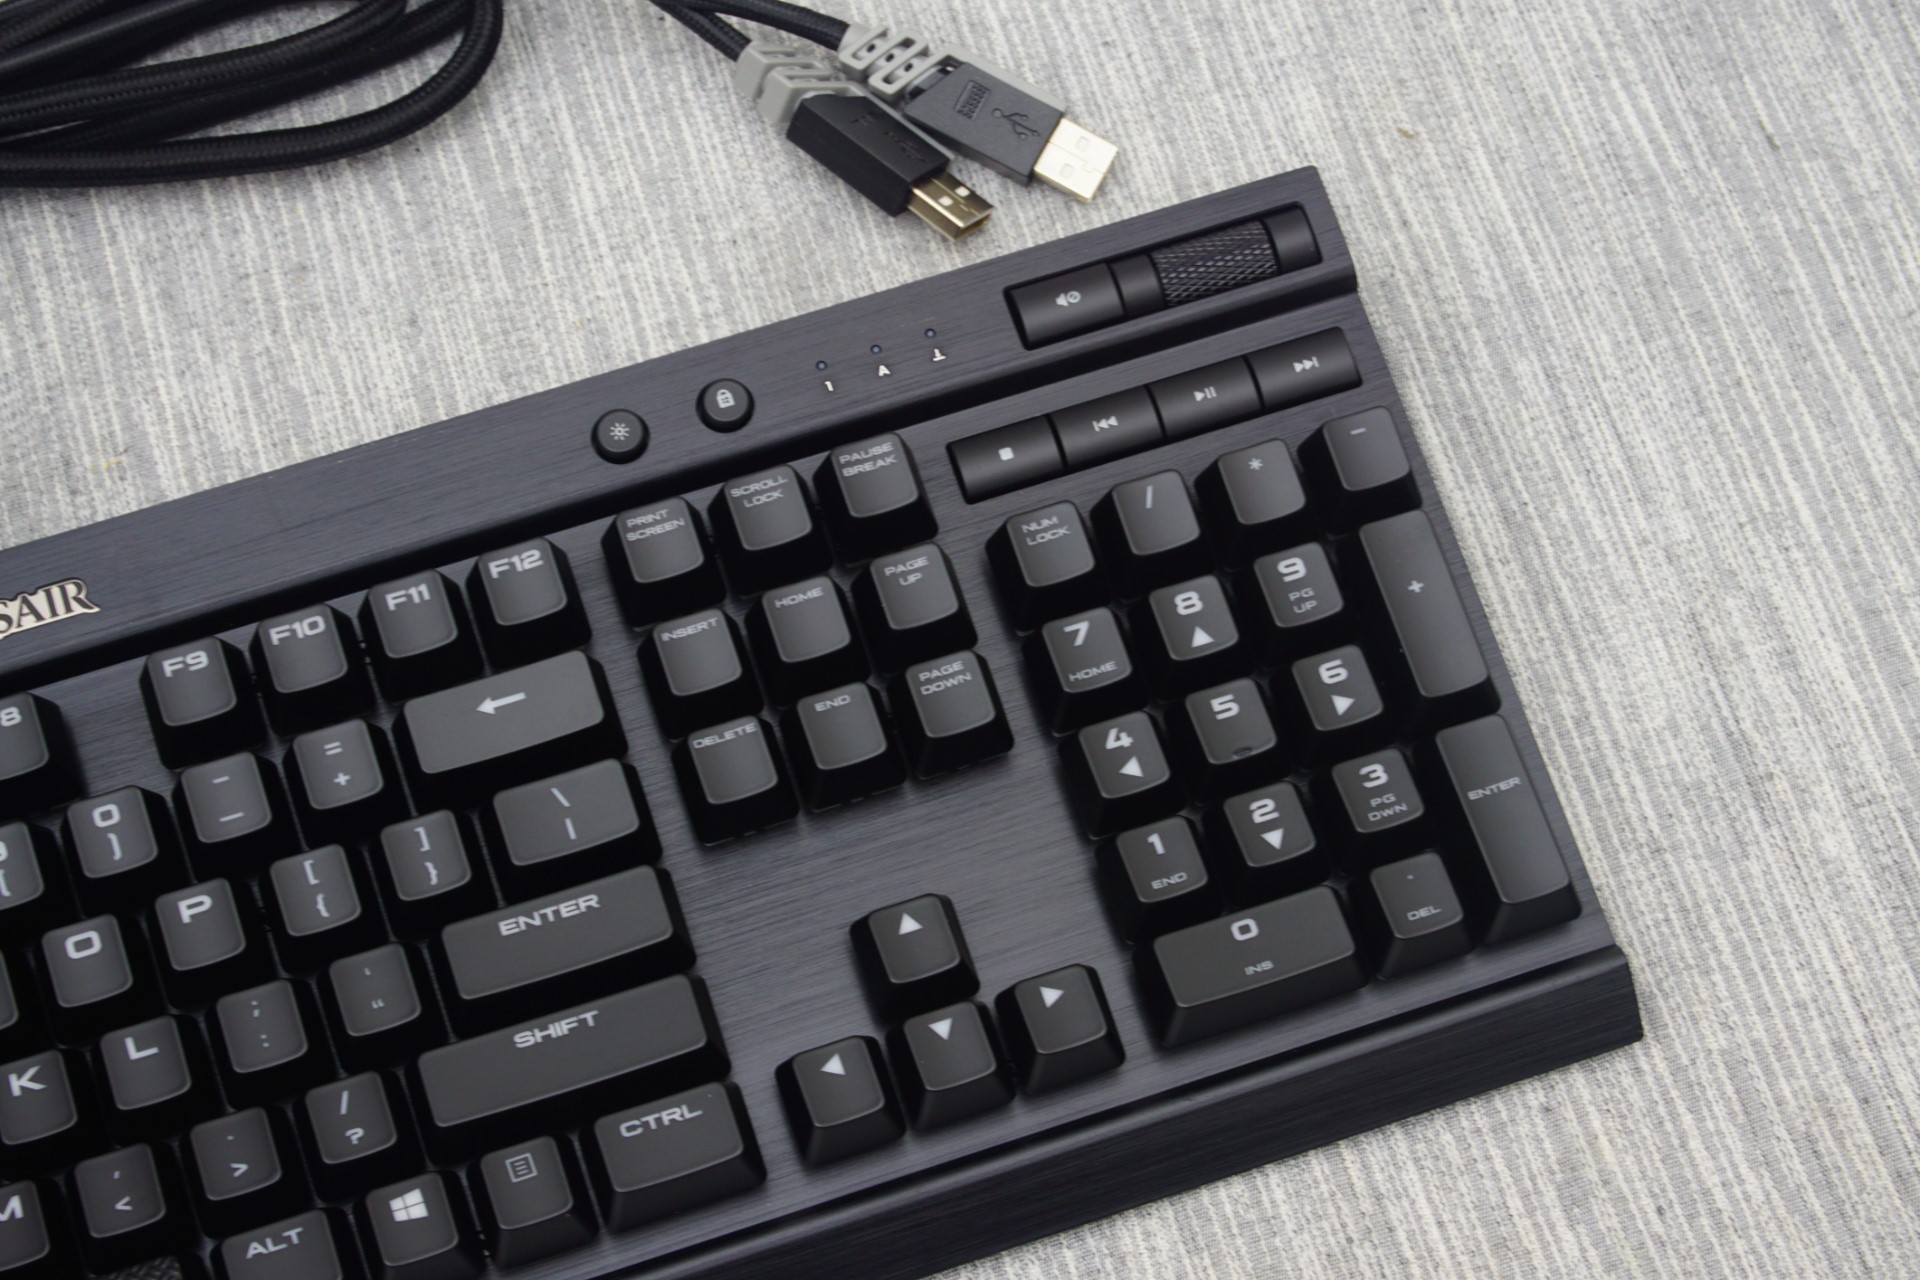 The Corsair K70 RGB RAPIDFIRE Gaming Keyboard - The Gaming K70 RGB RAPIDFIRE Mechanical Review